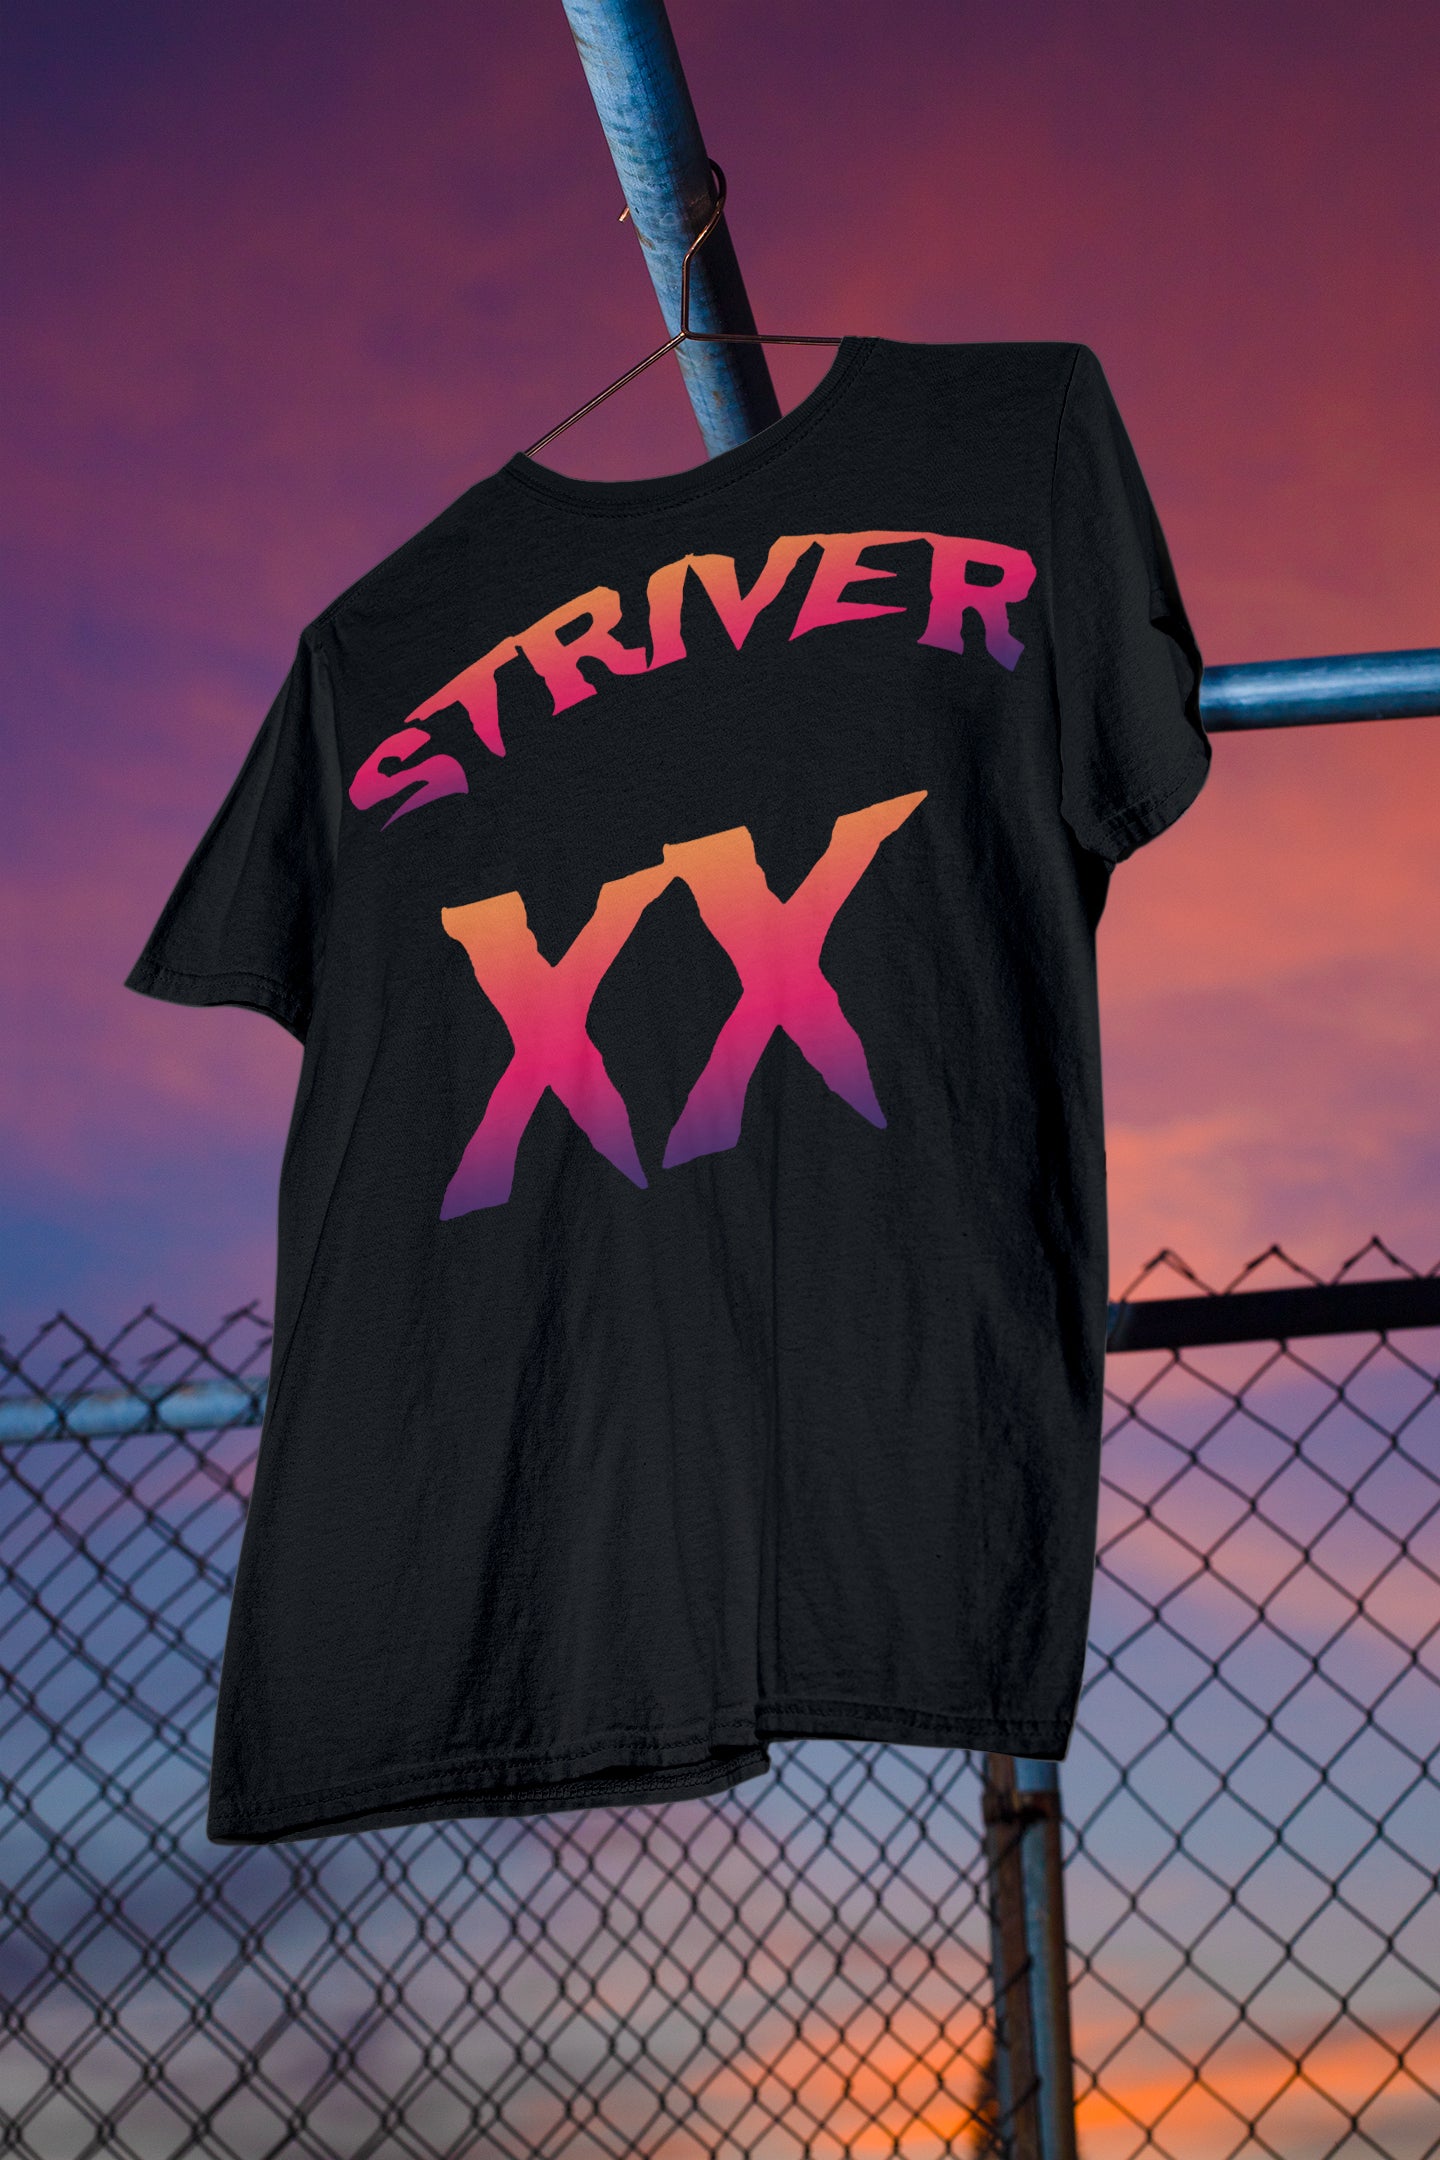 ATR | STRIVER XX Black Short Sleeve Tee